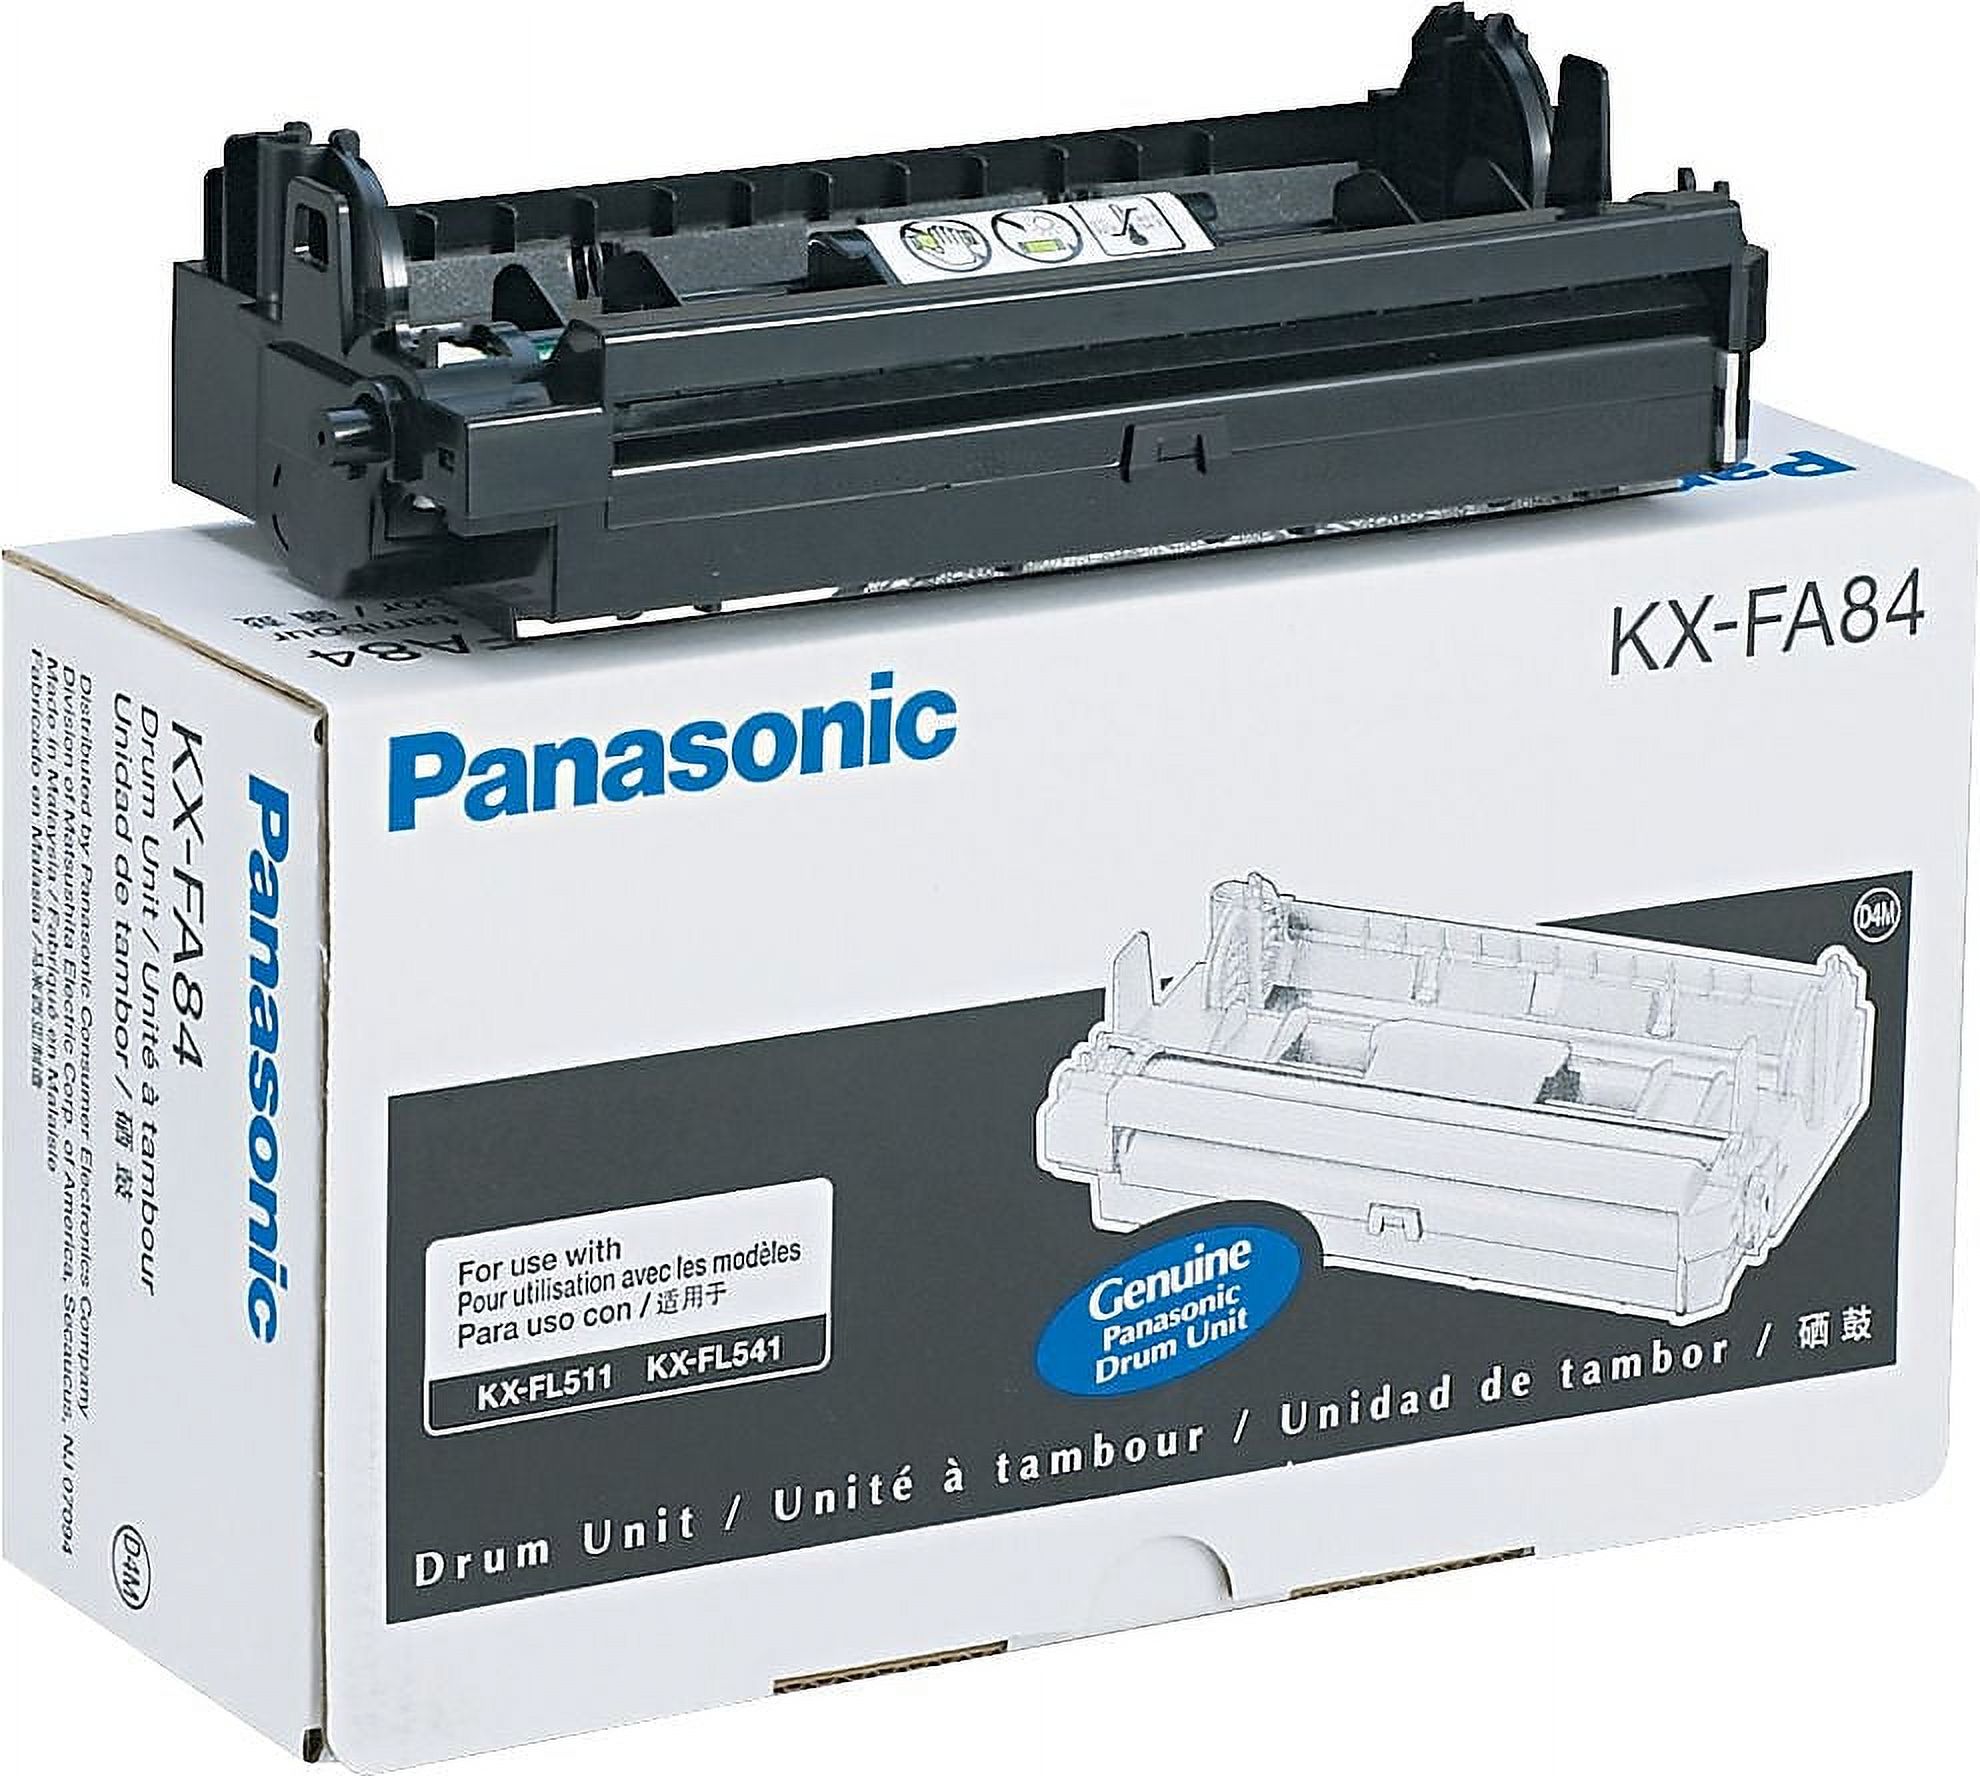 Panasonic kx-fl511 drum - image 2 of 2